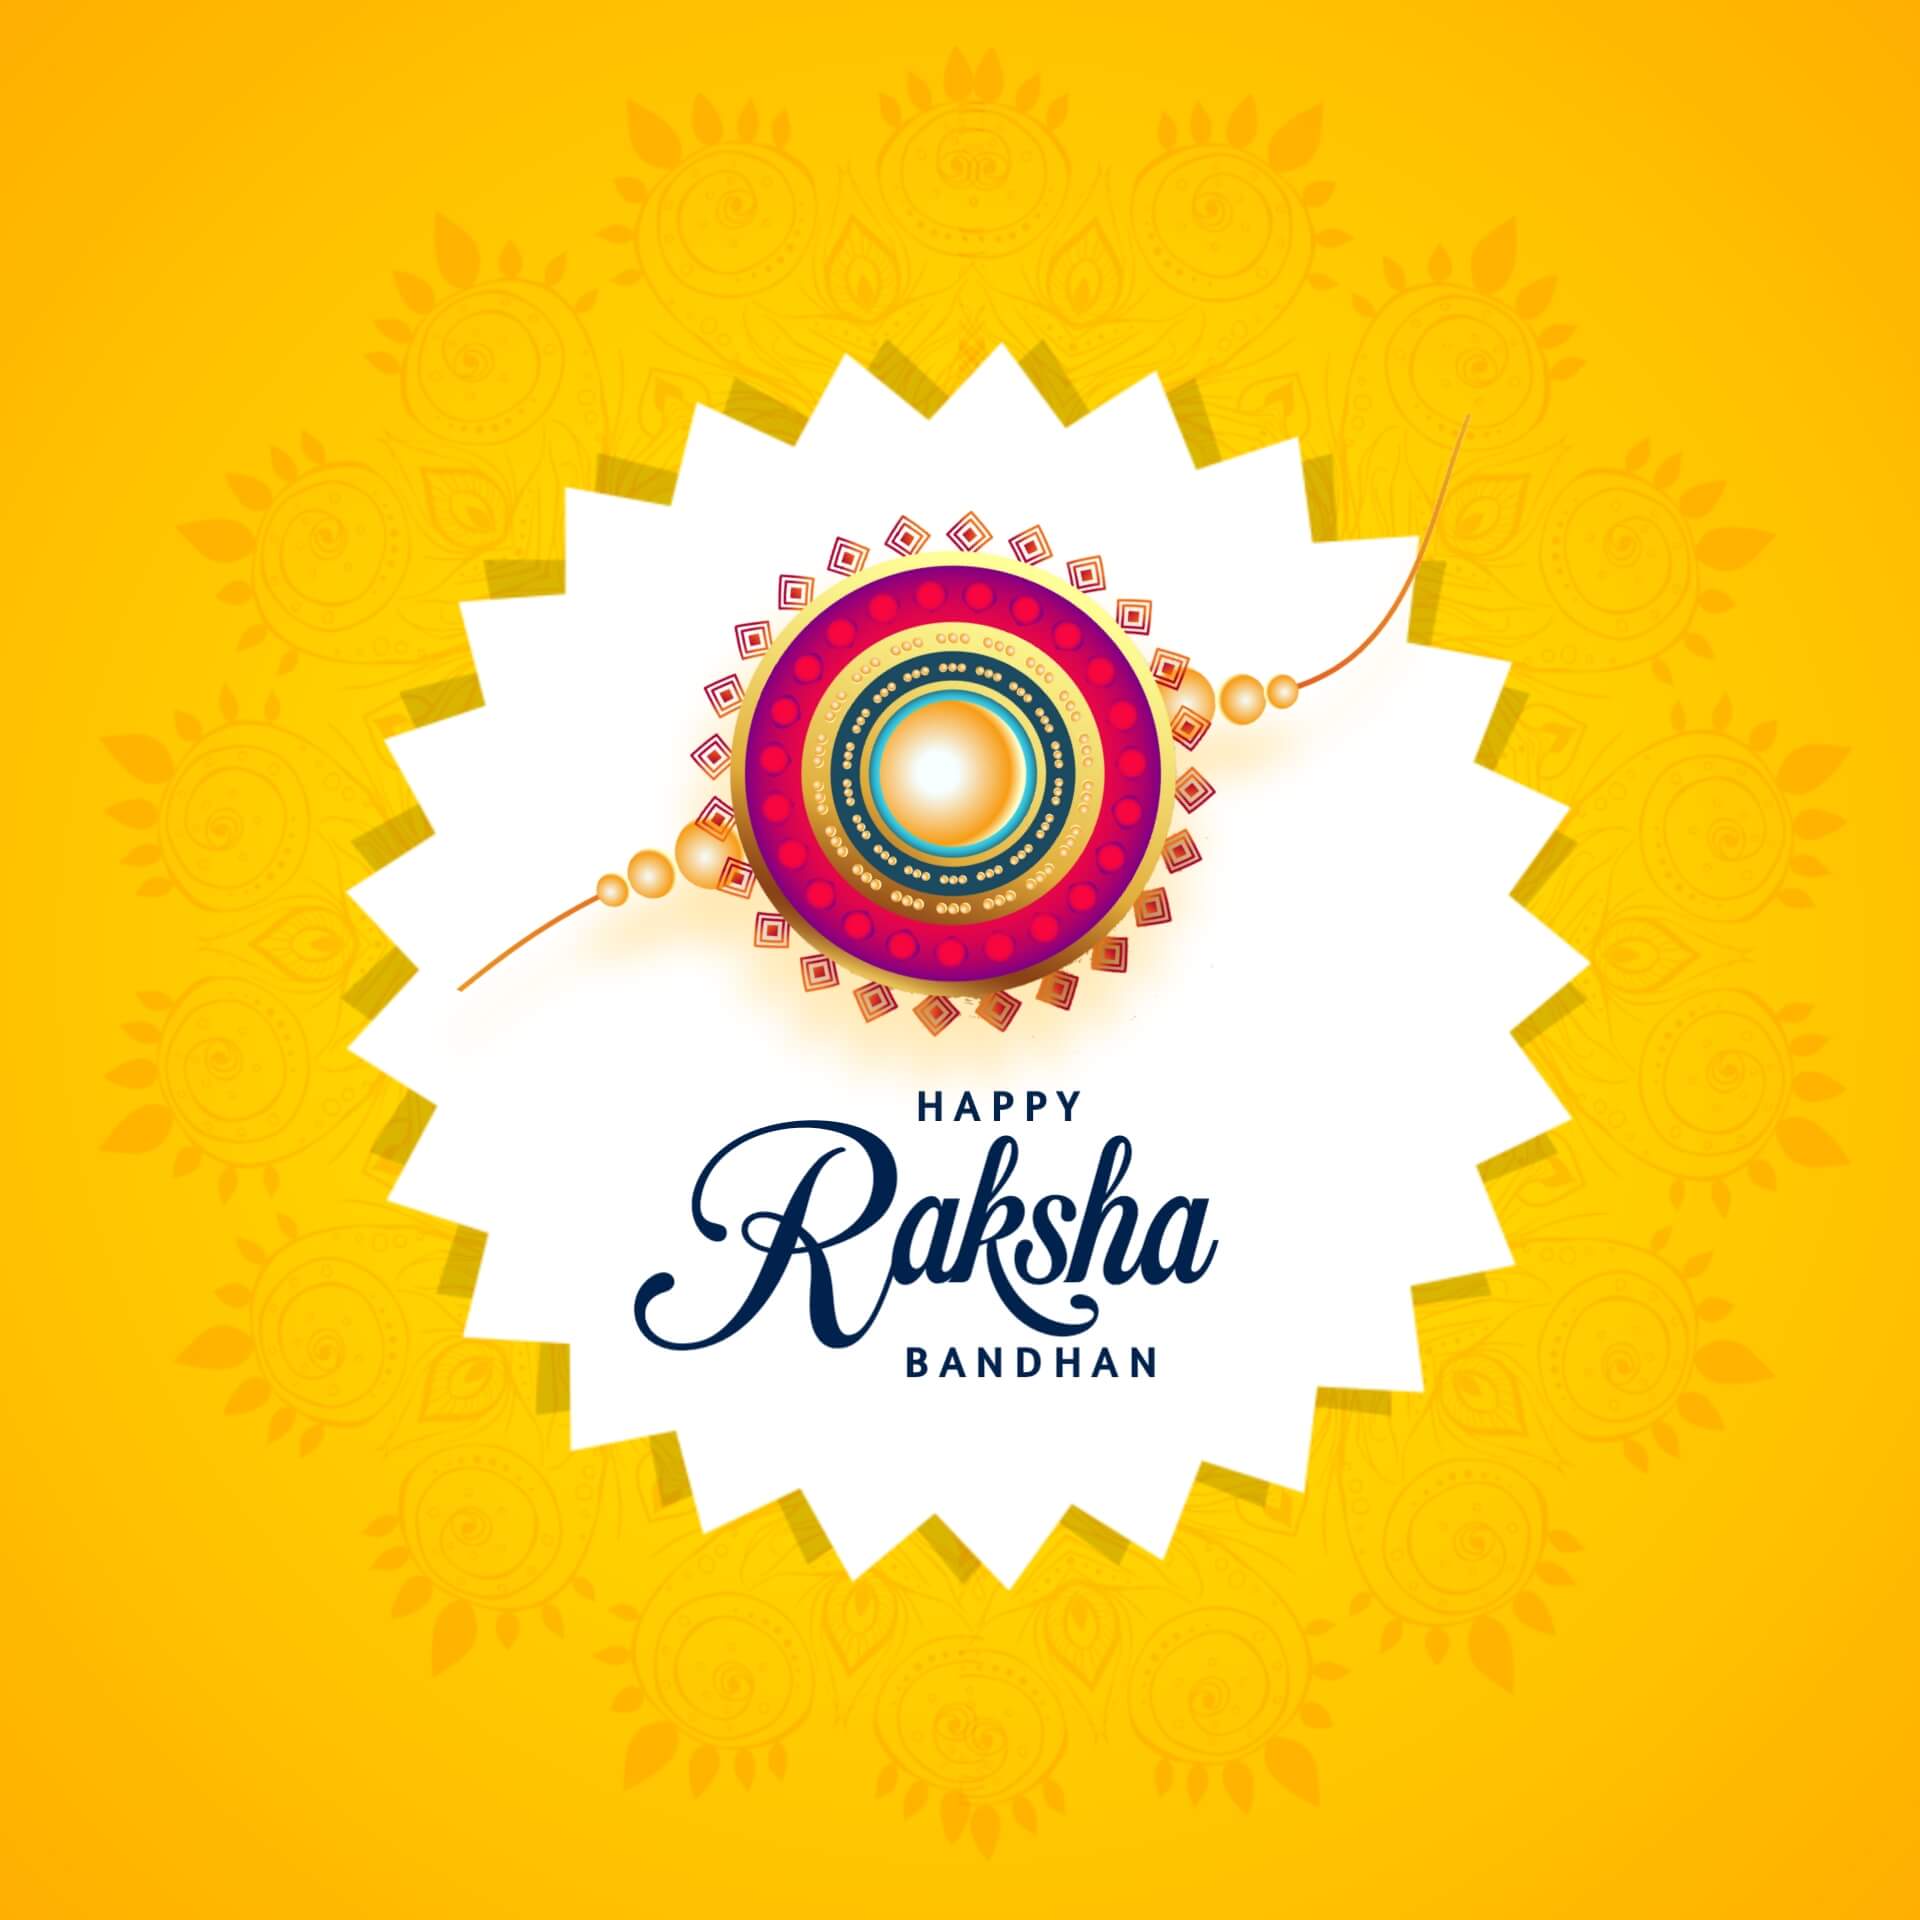 Happy Raksha Bandhan Image with Yellow Background